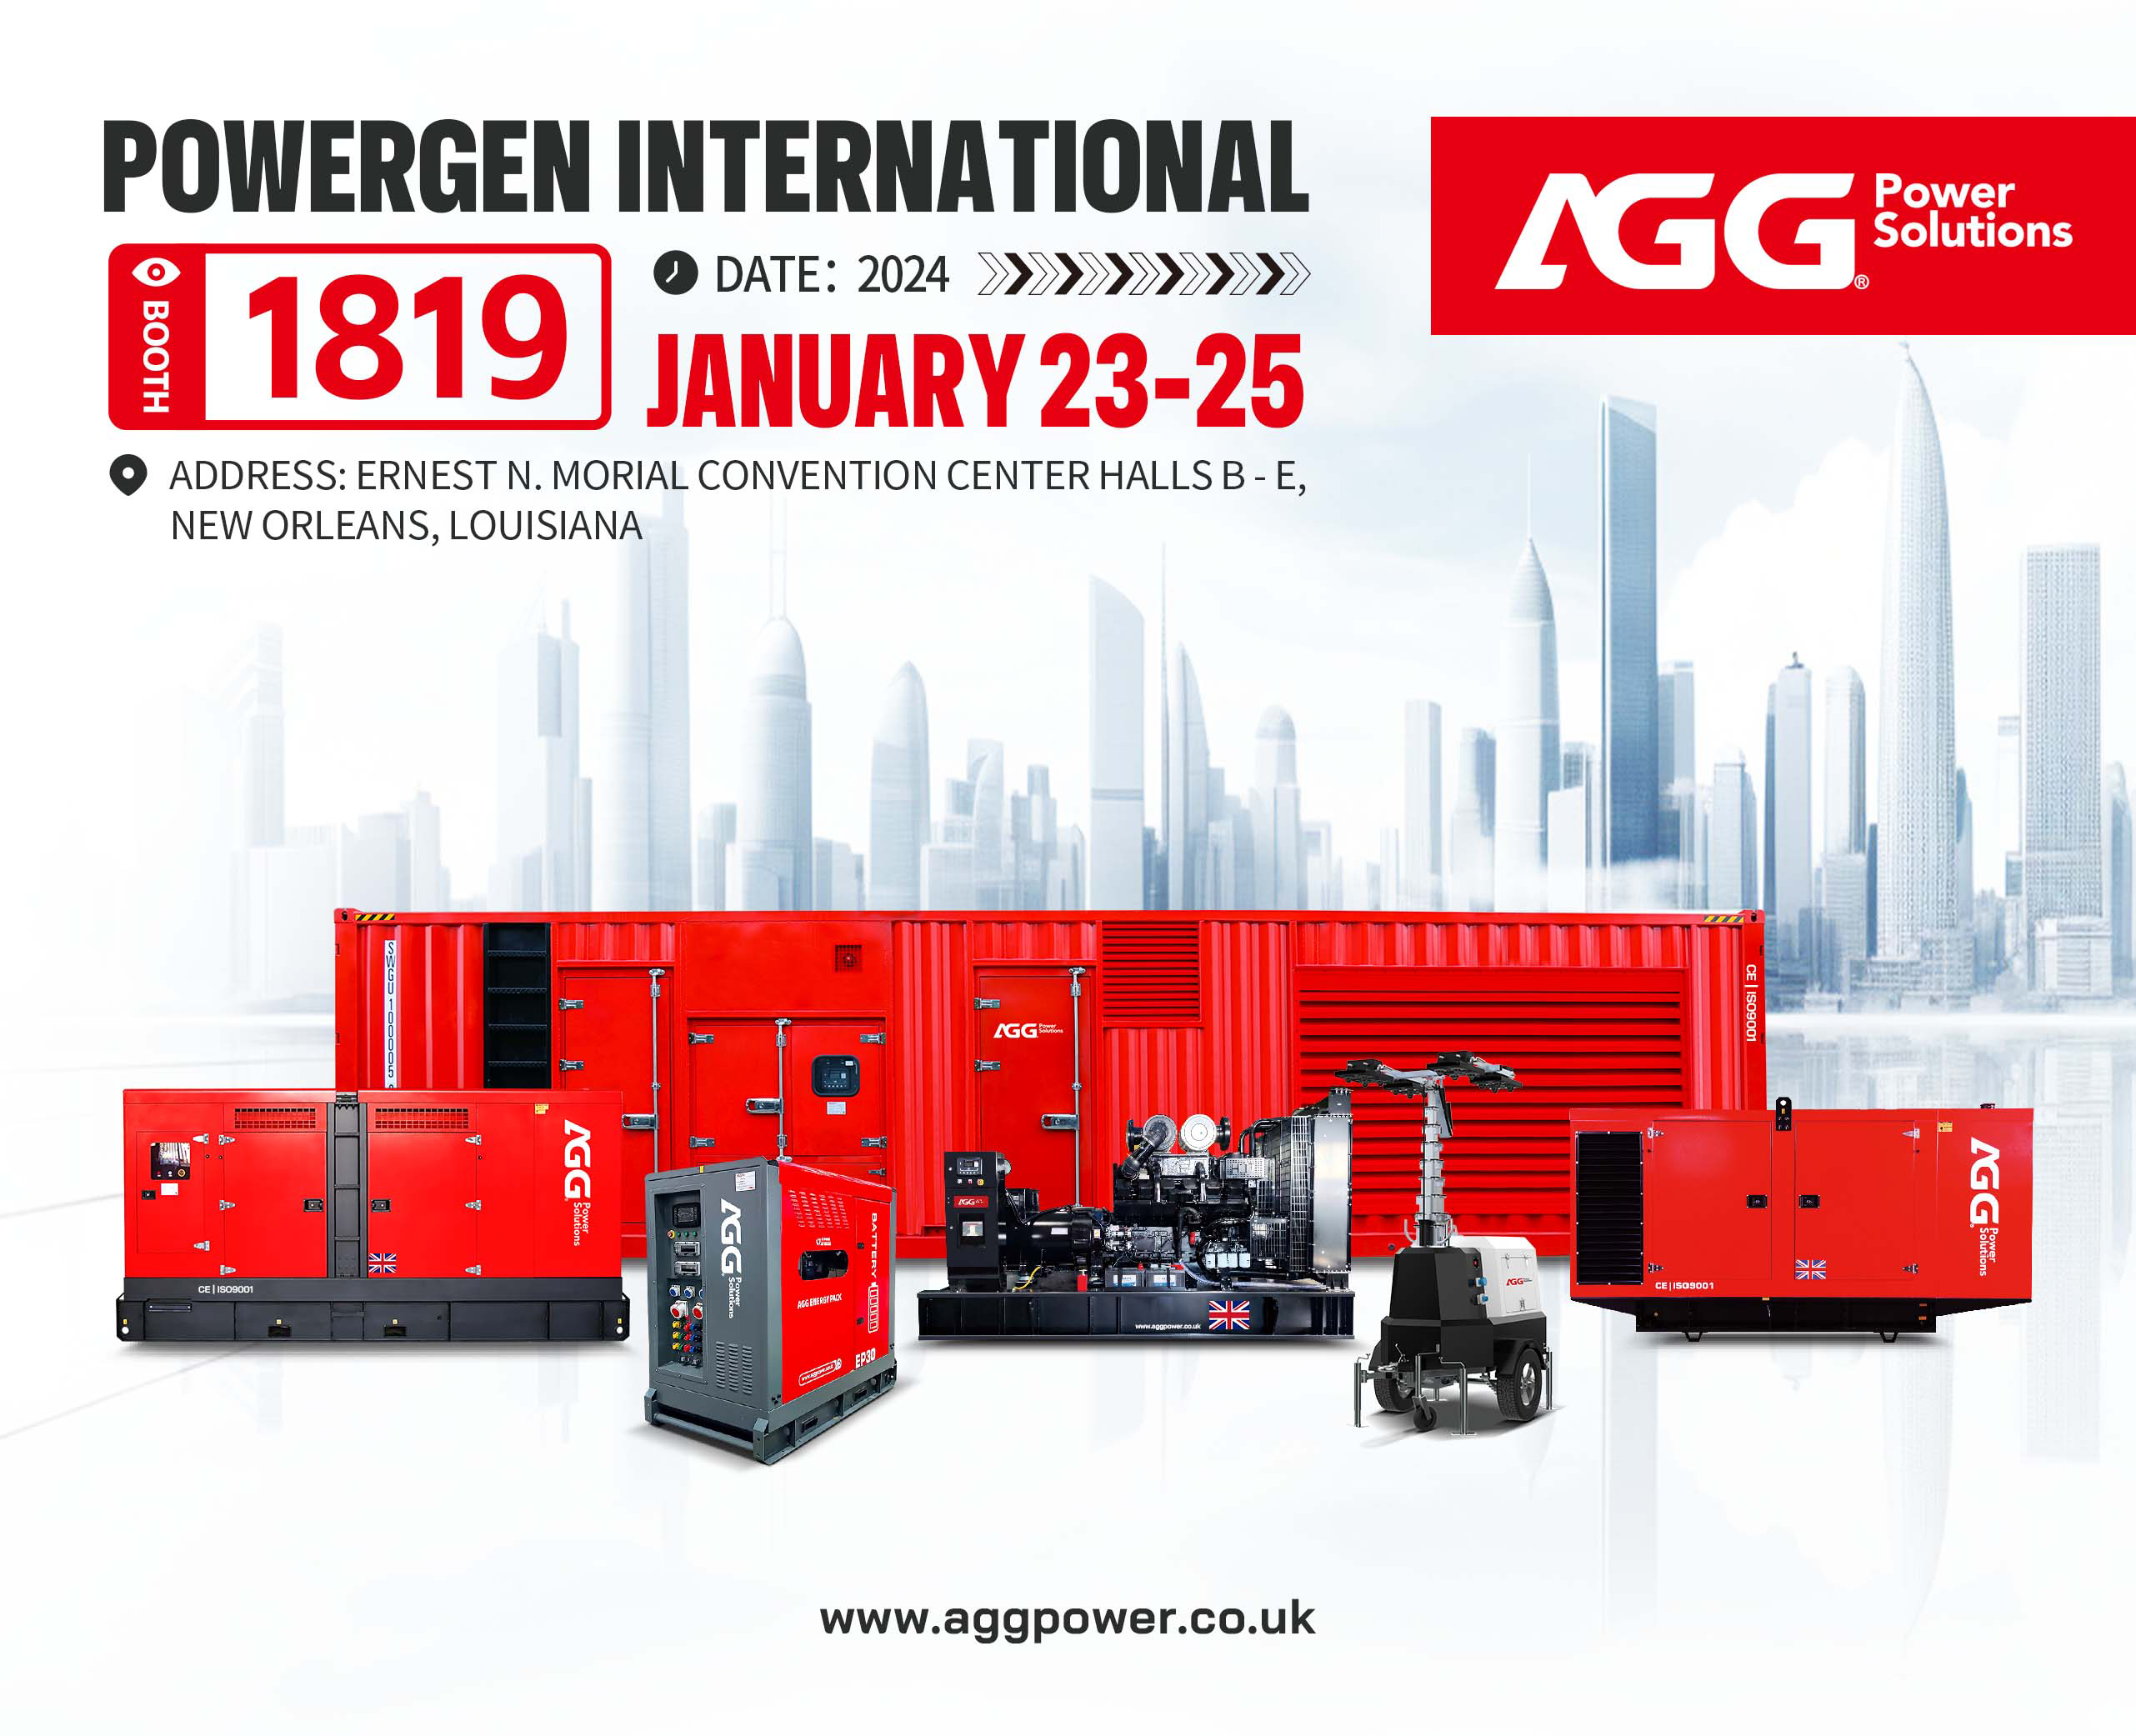 Selamat Datang untuk Mengunjungi AGG di POWERGEN International 2024